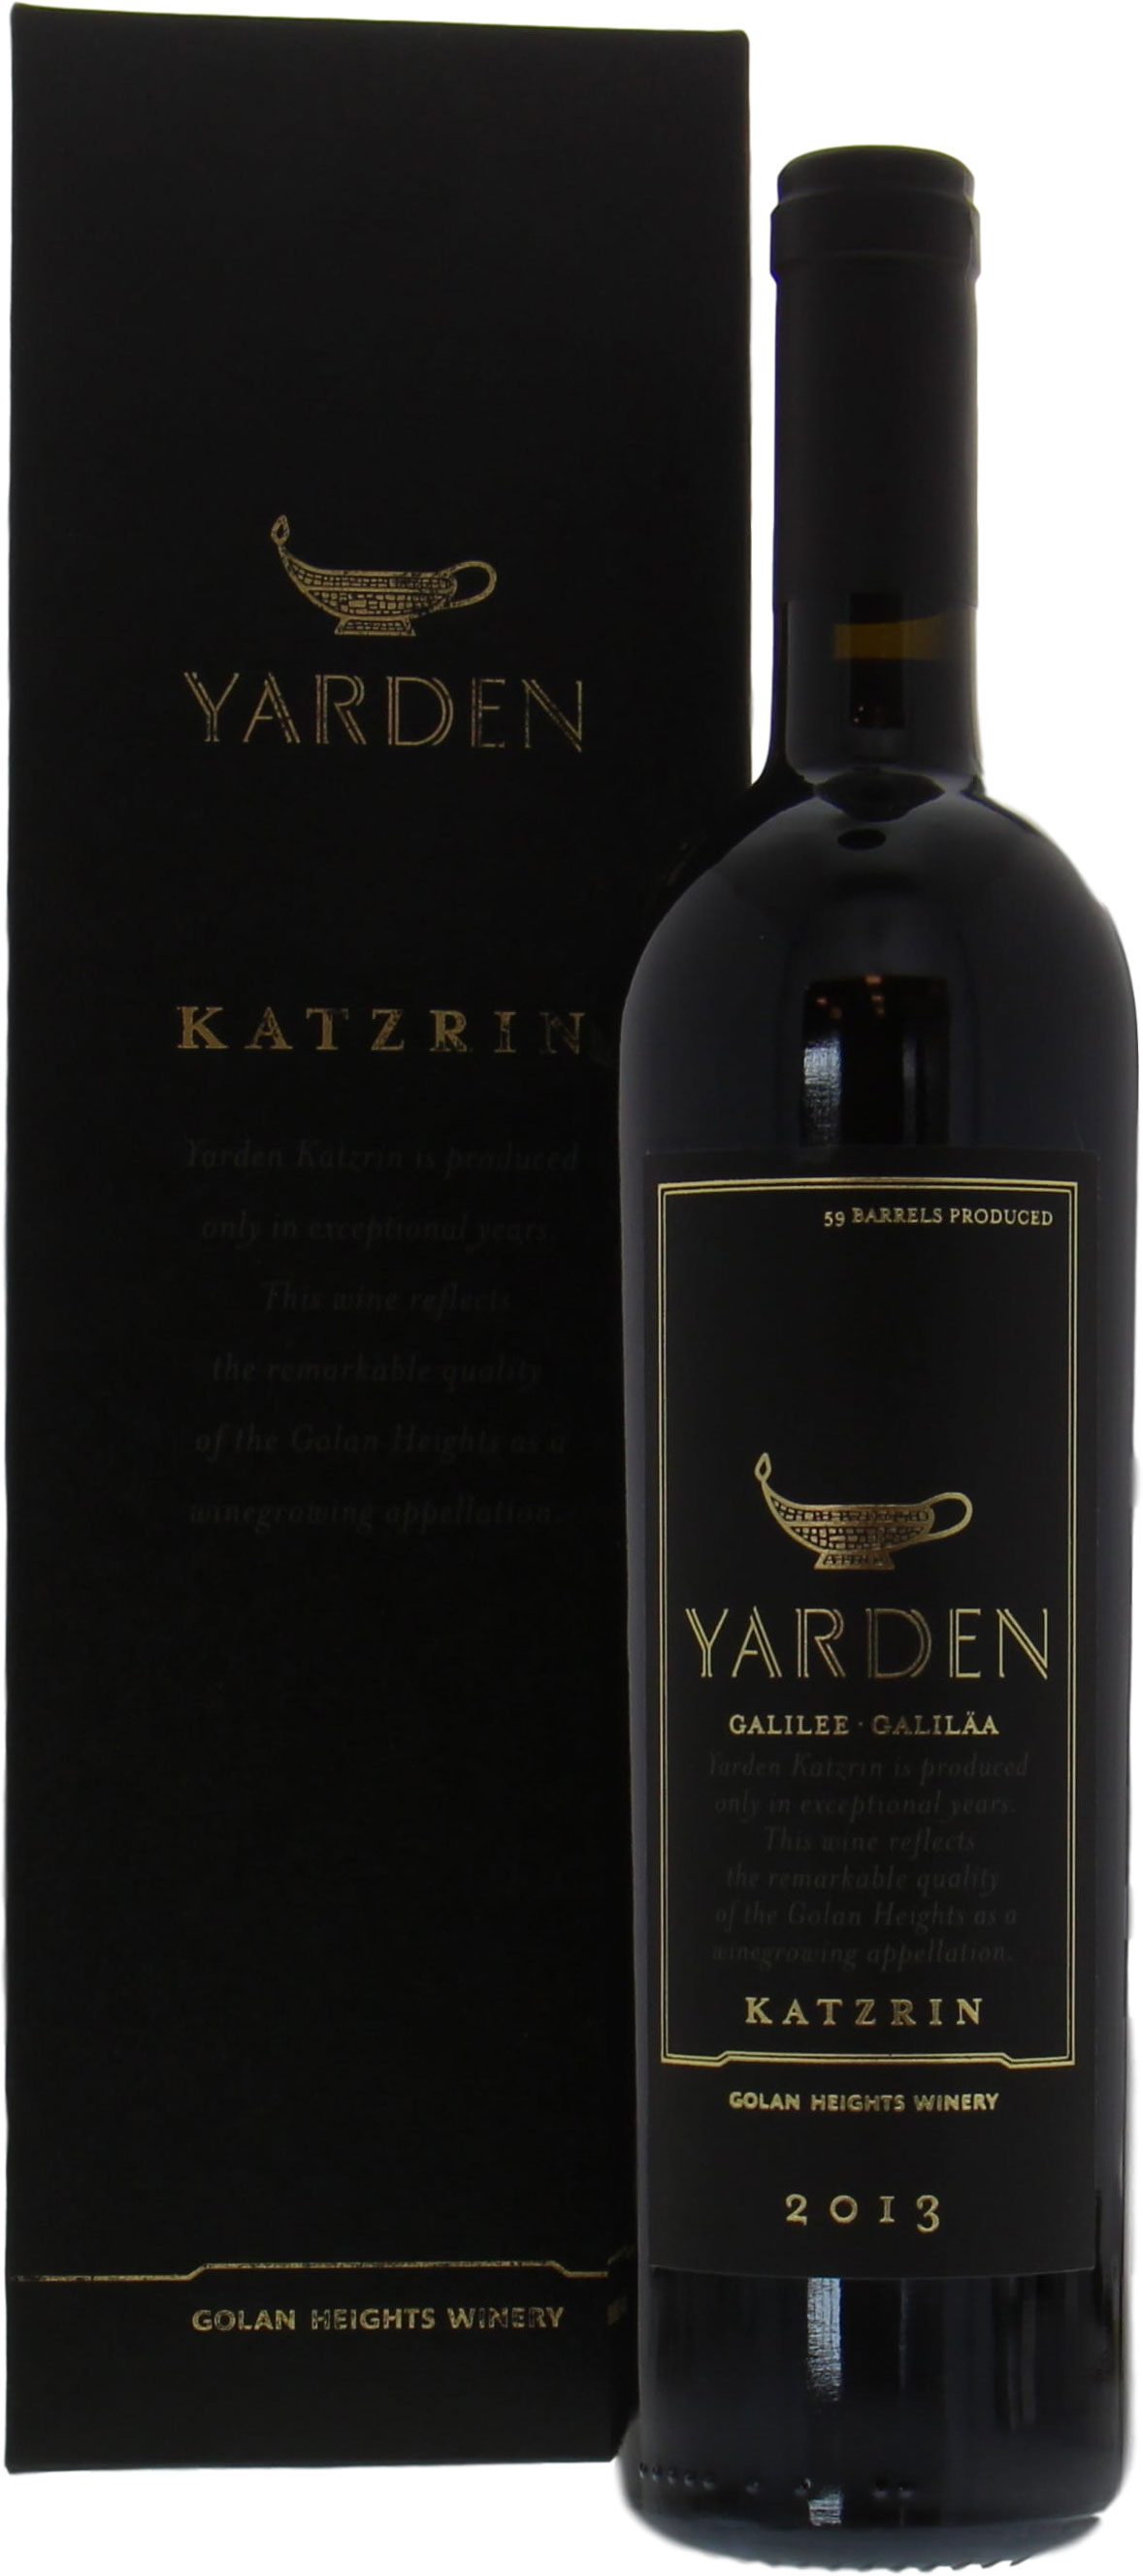 Golan Heights Winery  - Yarden Katzrin Galilee 2013 Perfect